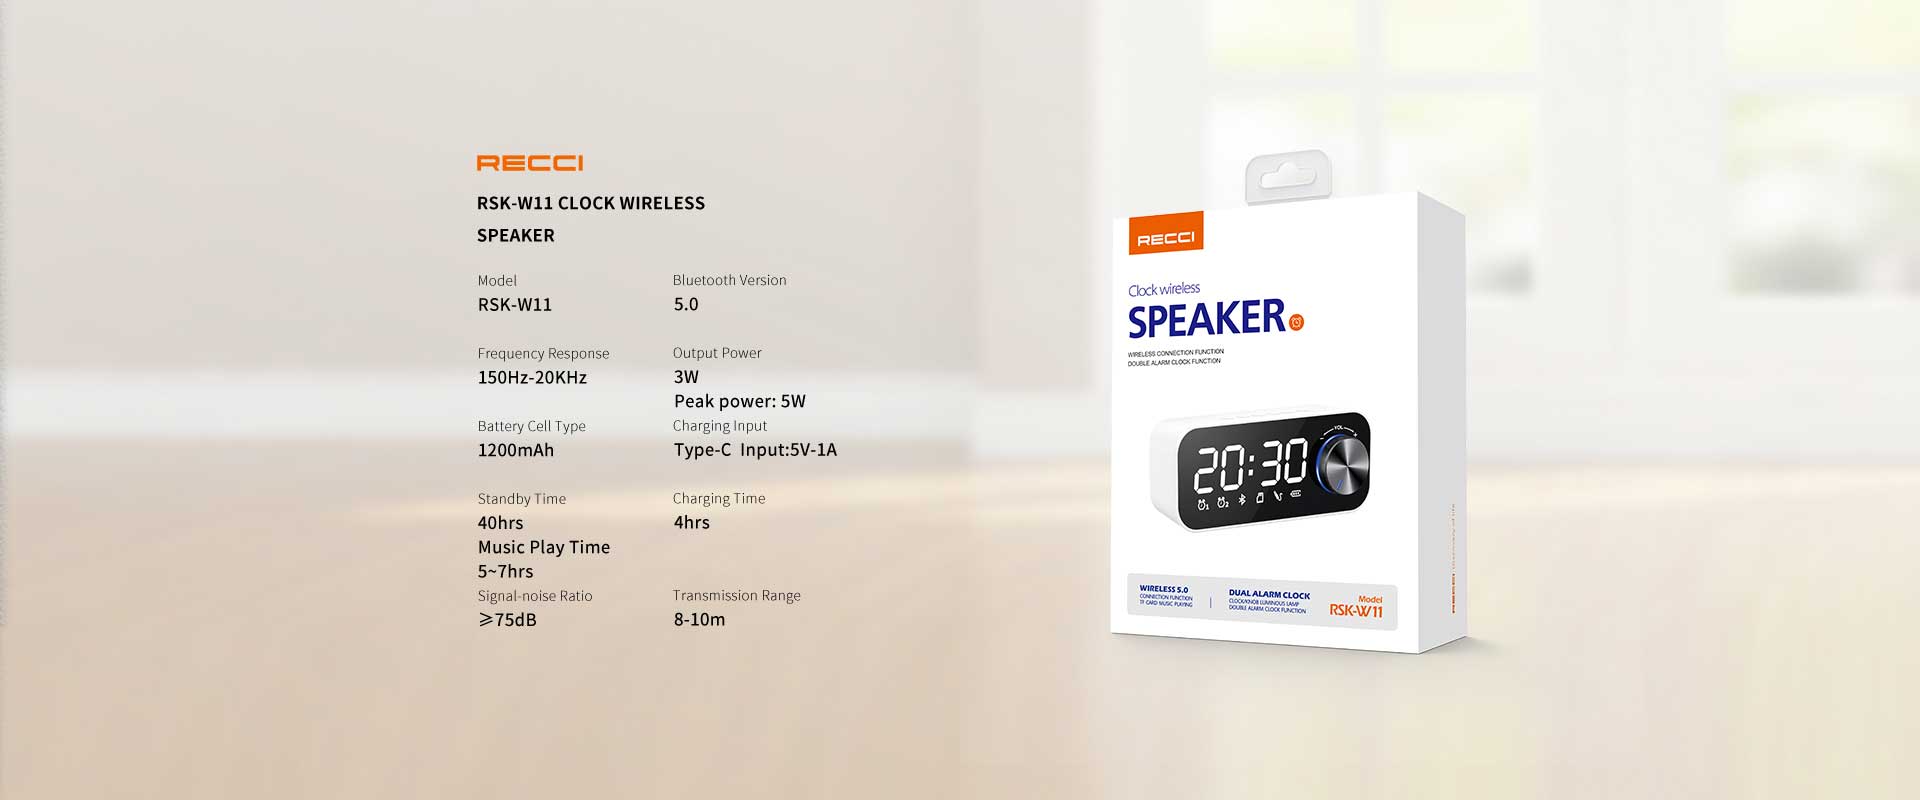 RECCI RSK W11 Wireless Speaker with Alarm Clock 8